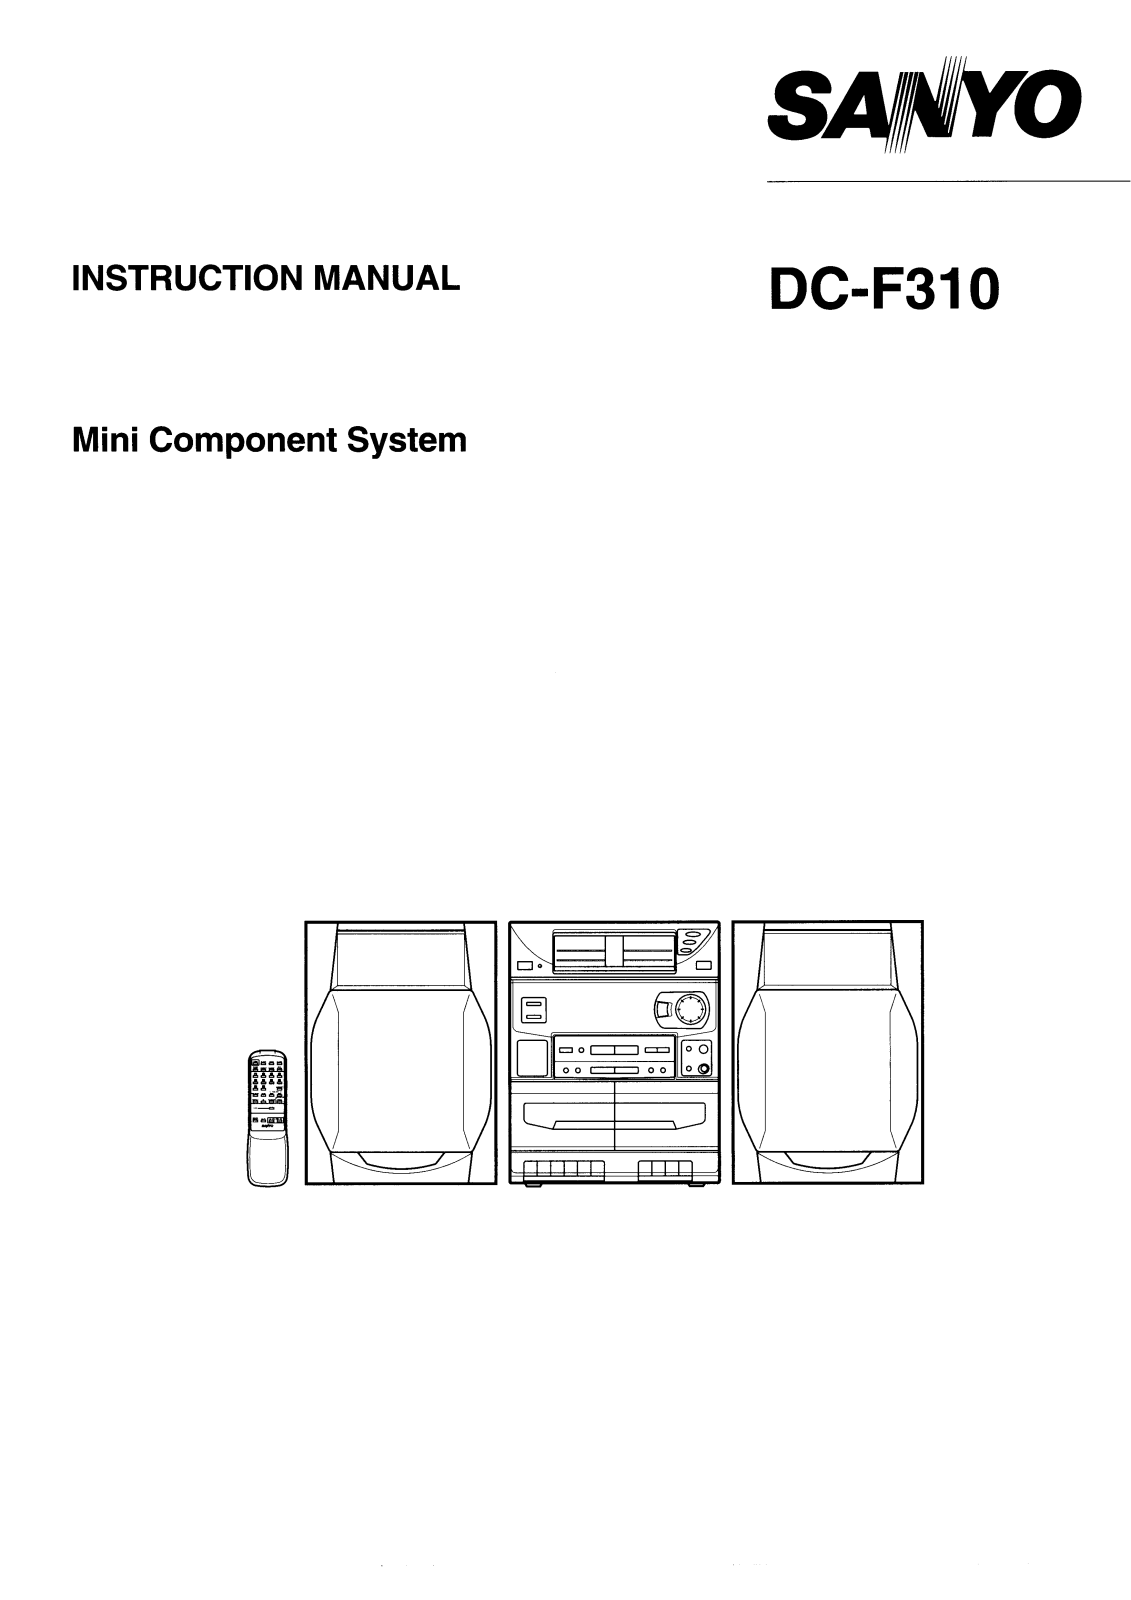 Sanyo DC-F310 Instruction Manual